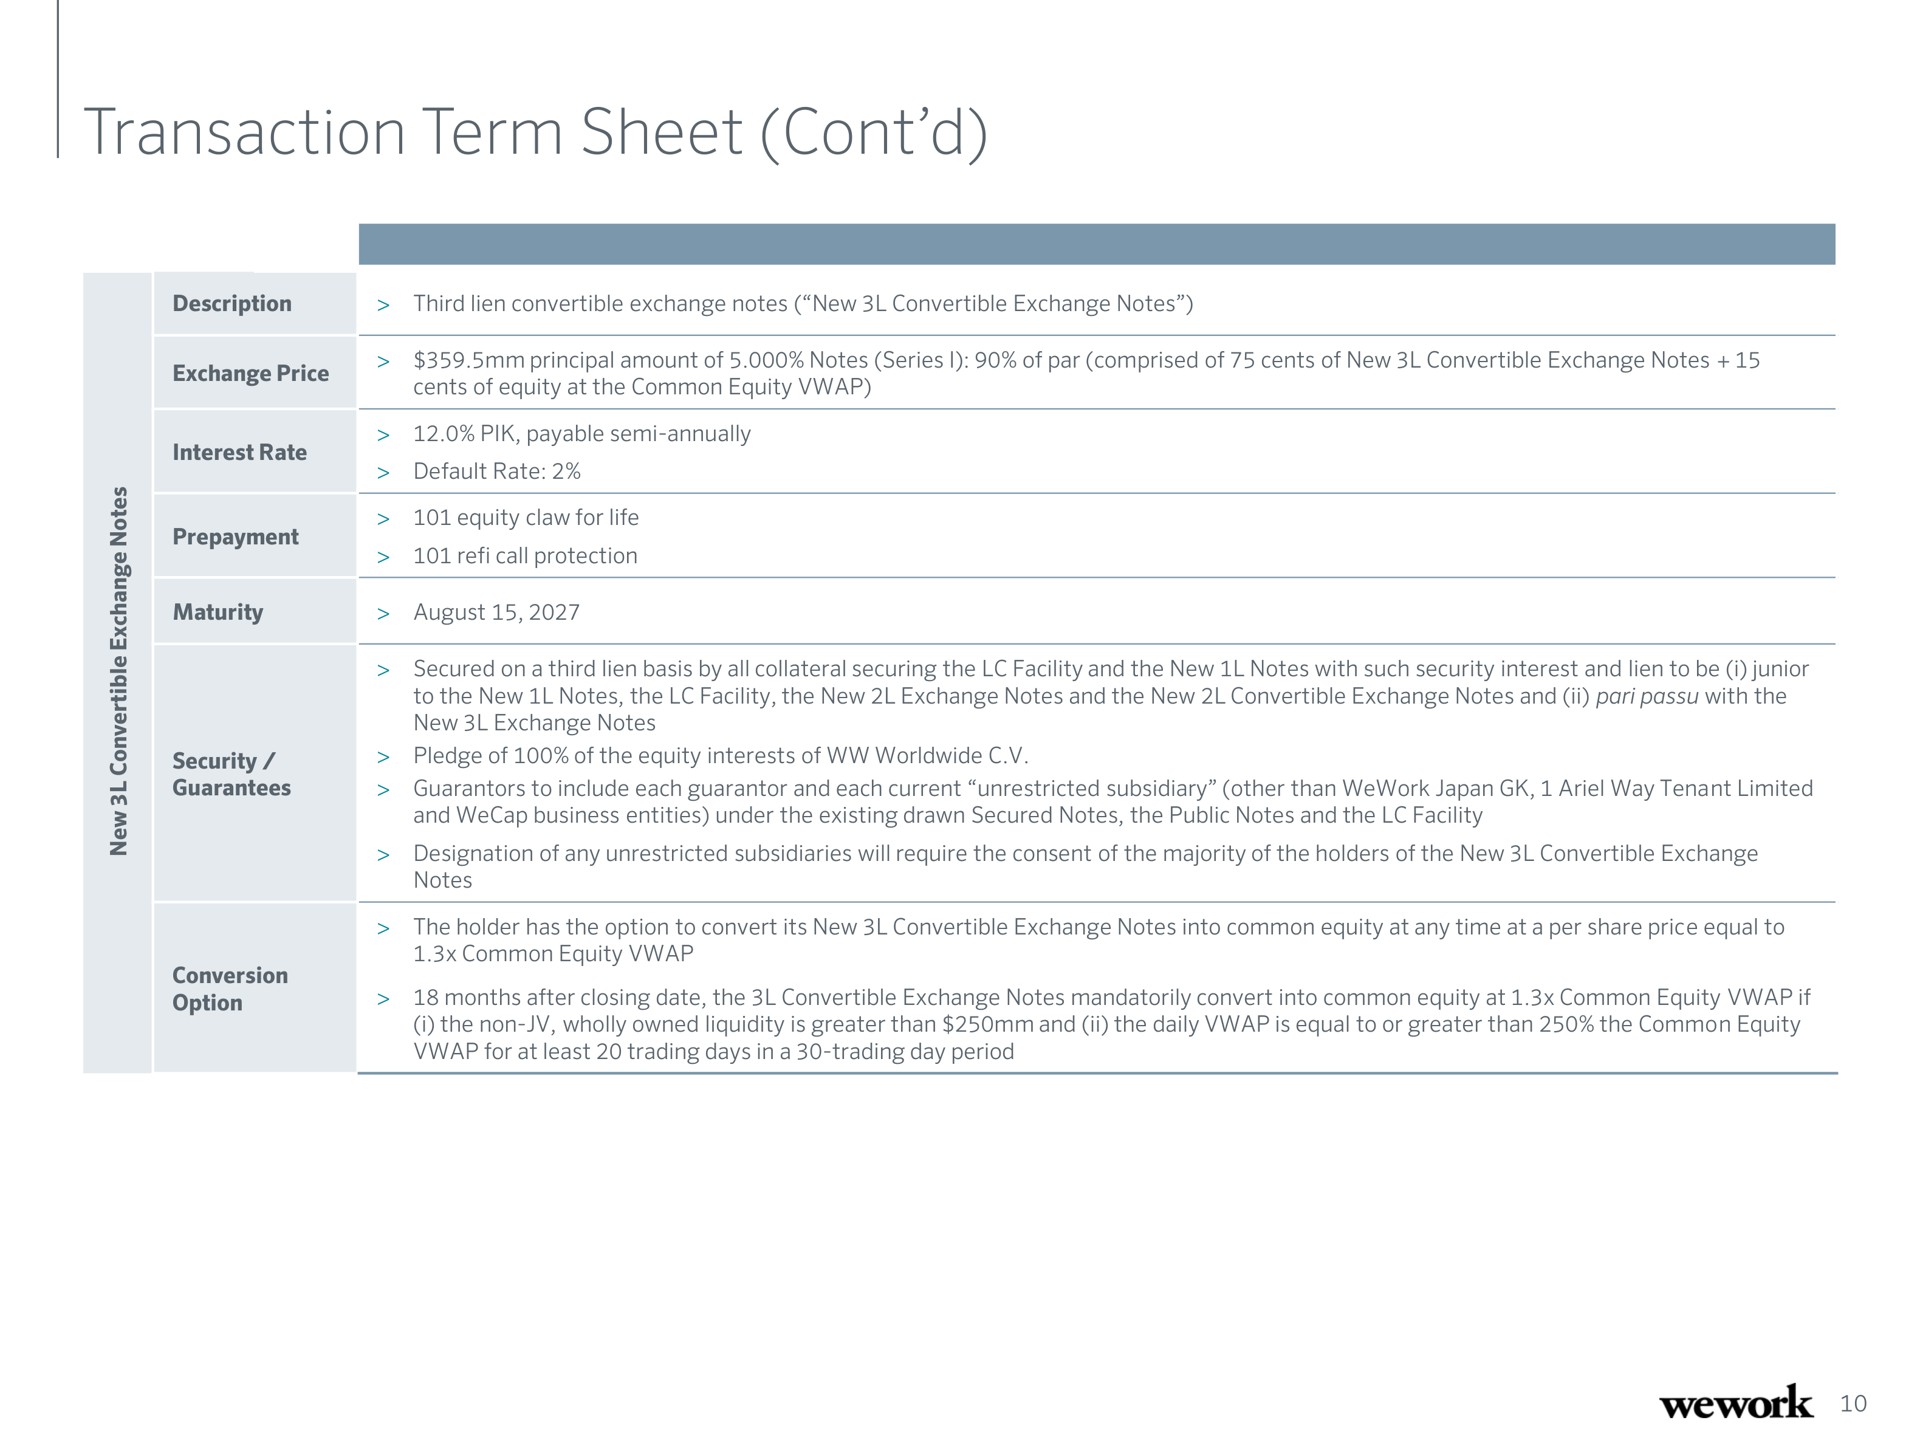 transaction term sheet | WeWork